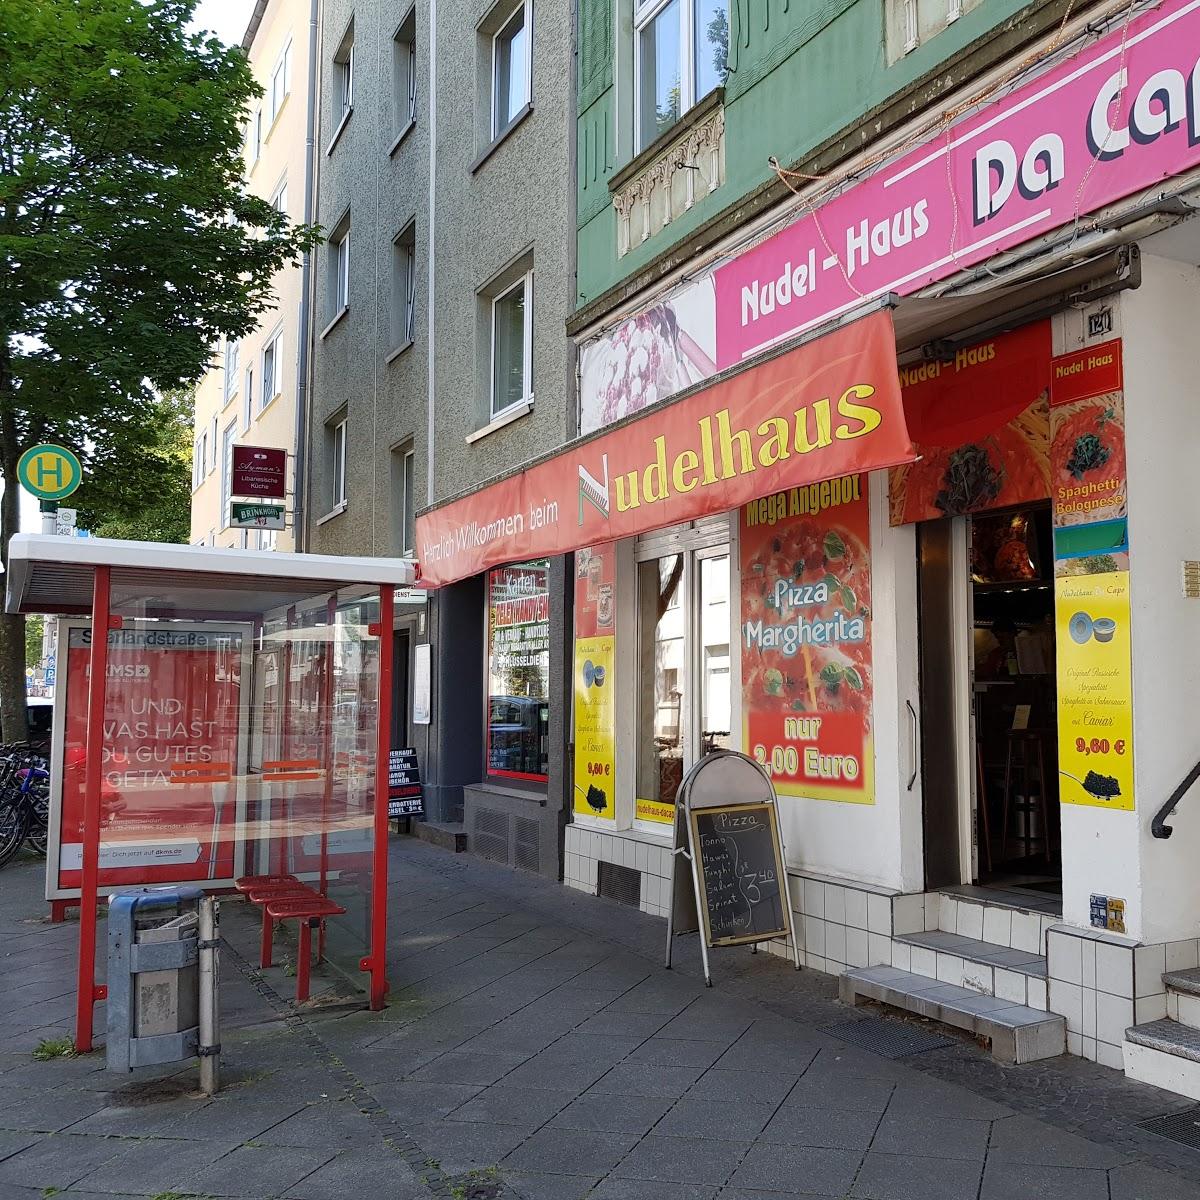 Restaurant "Nudelhaus Da Capo" in Dortmund